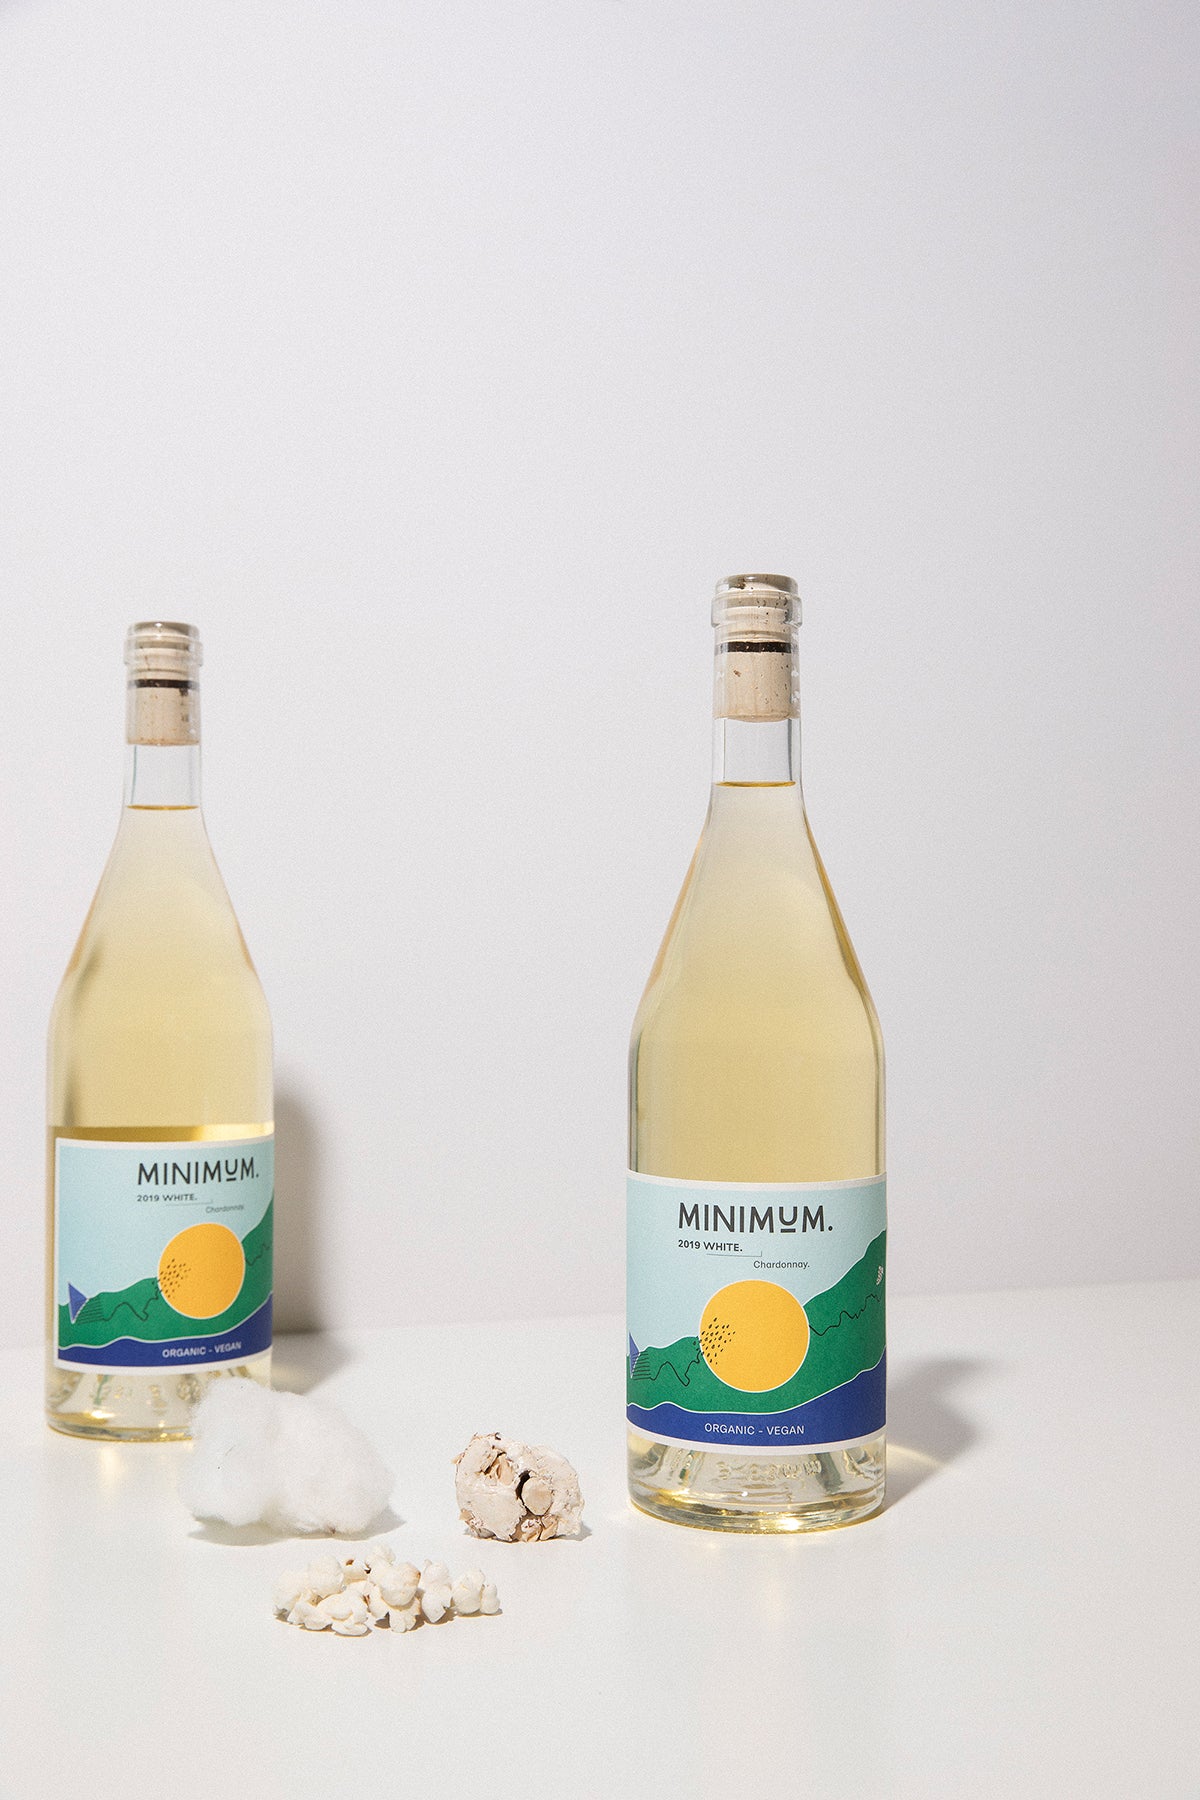 WHITE → 2019 Chardonnay.